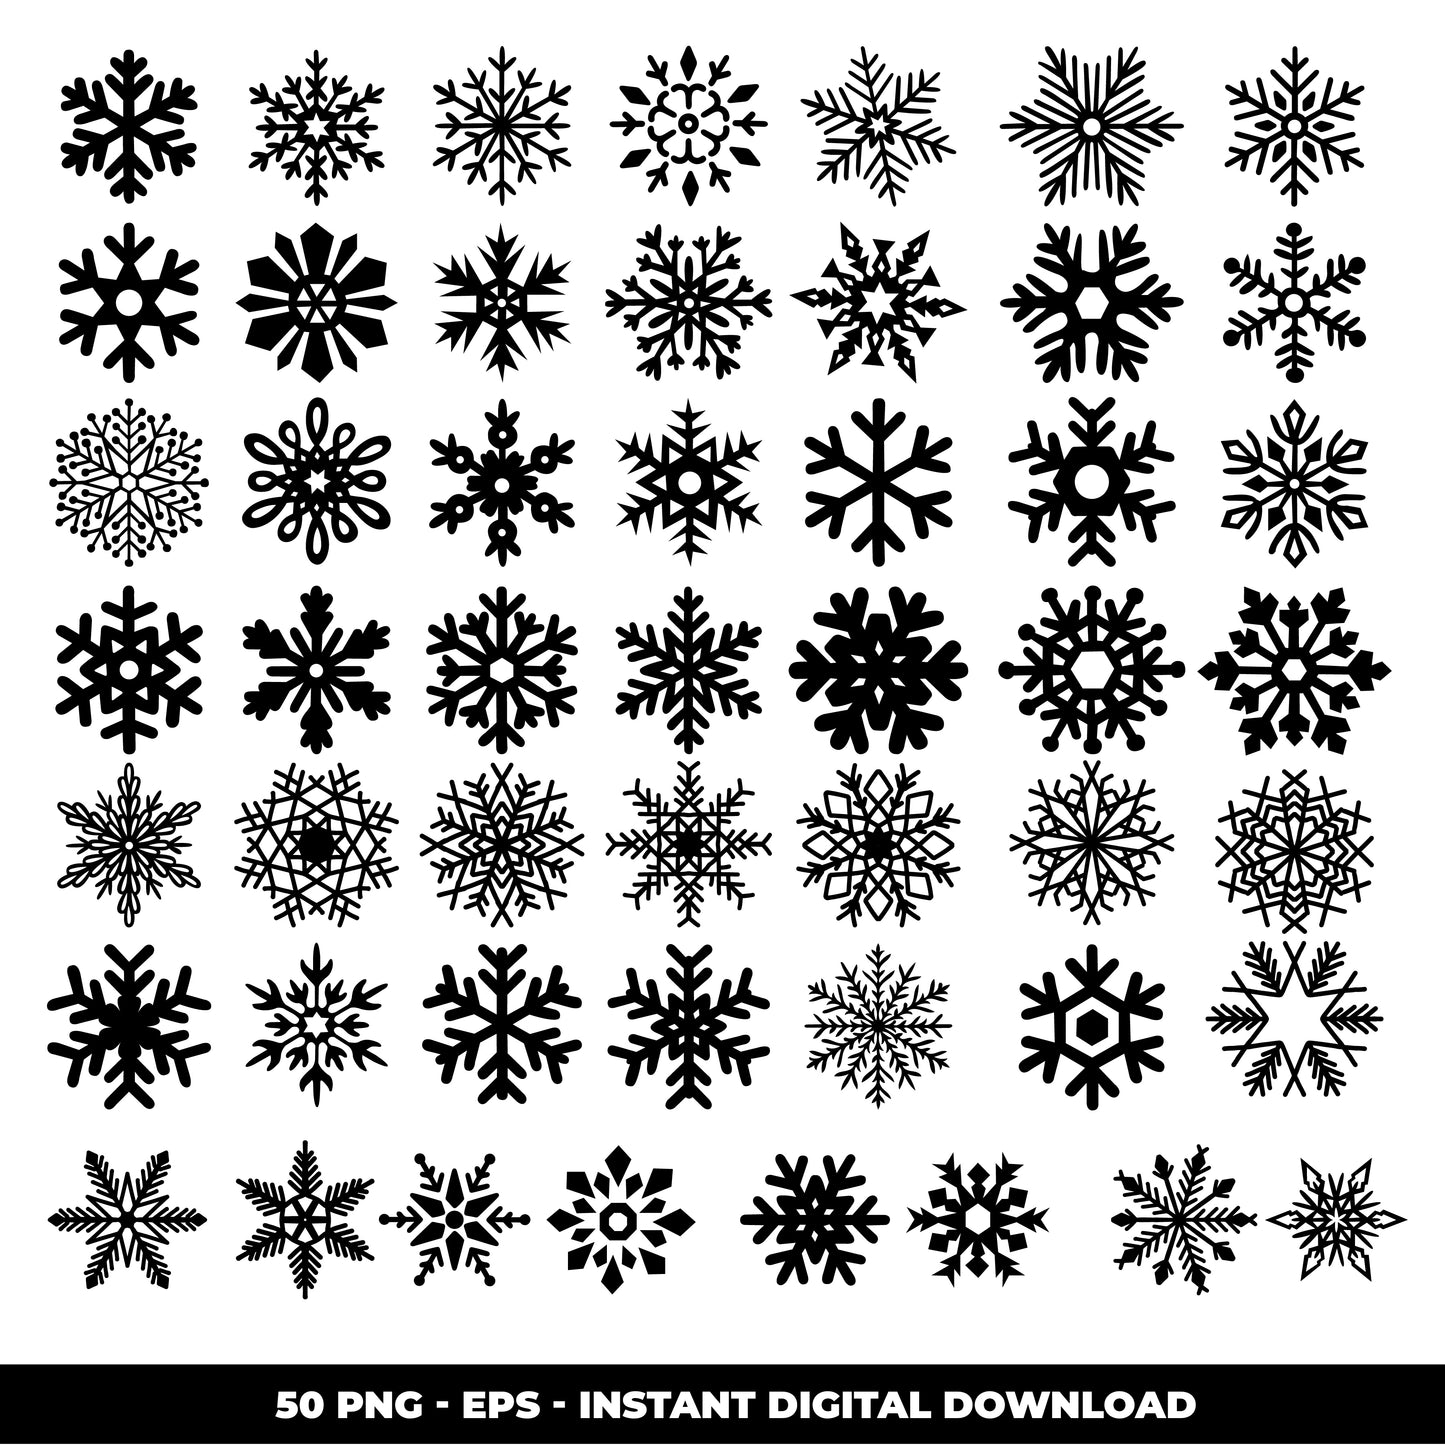 COD849- Snowflake clipart, winter snowflake eps,  Merry Christmas clipart, winter clipart